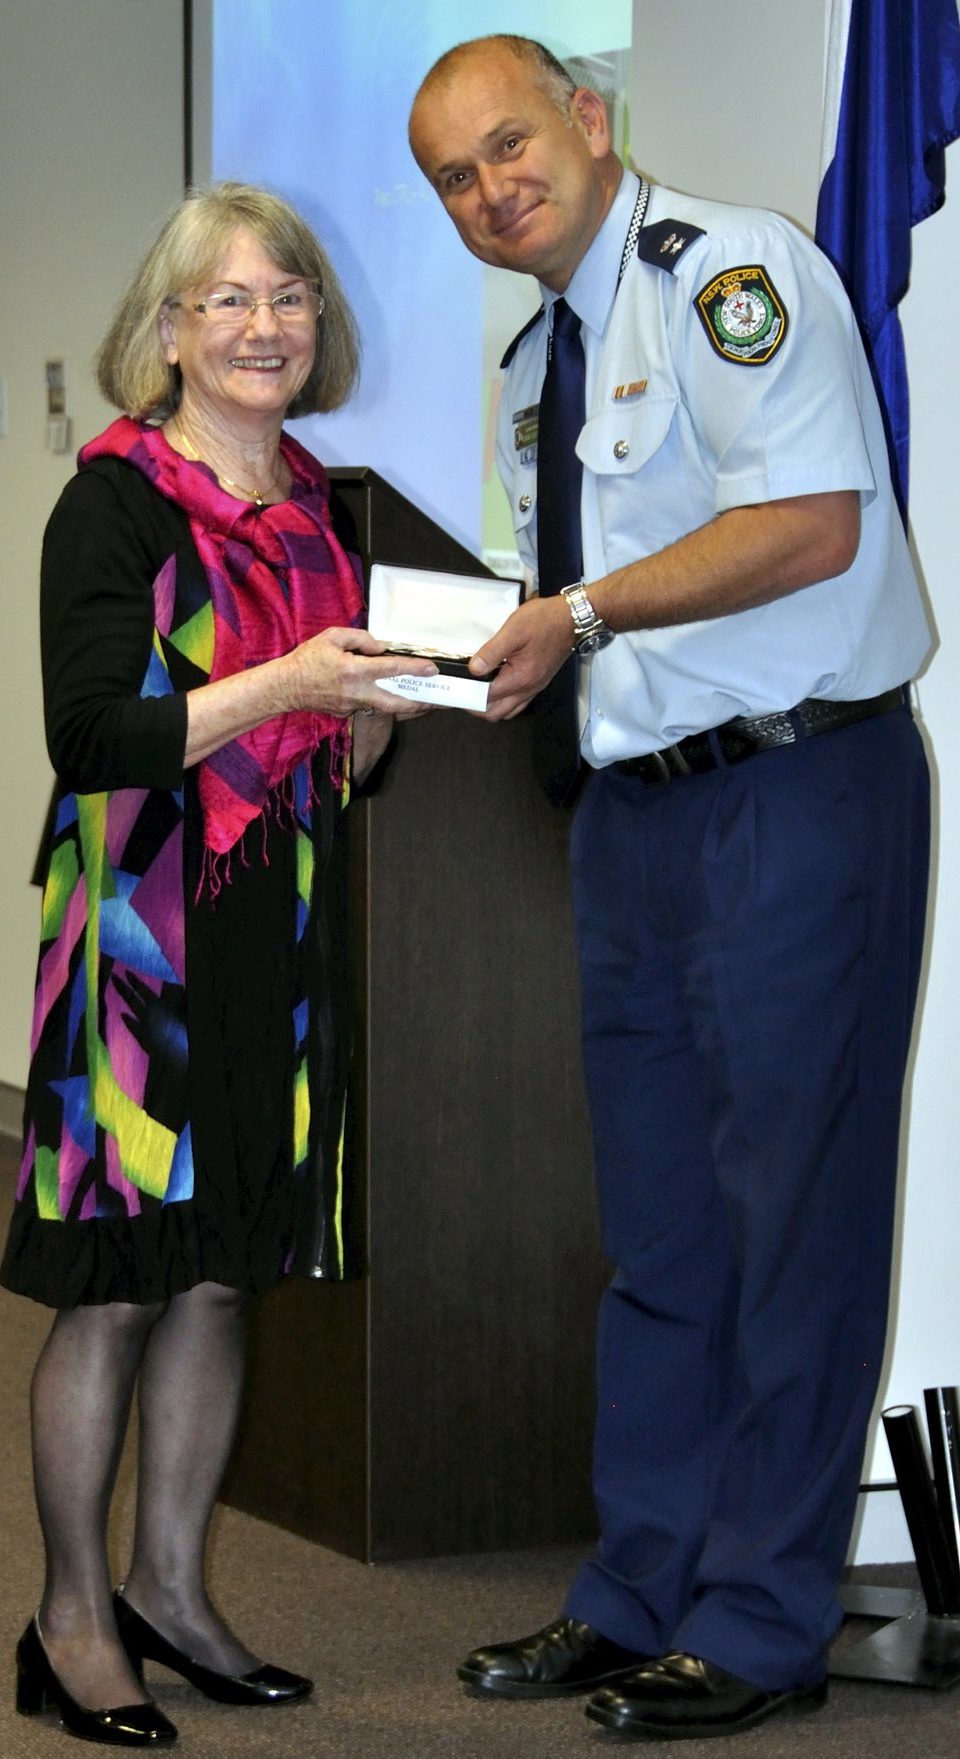 Susan GOOD - wife of John Stafford GOOD ( R.I.P. ) accepting the Medal. https://www.australianpolice.com.au/john-stafford-good/